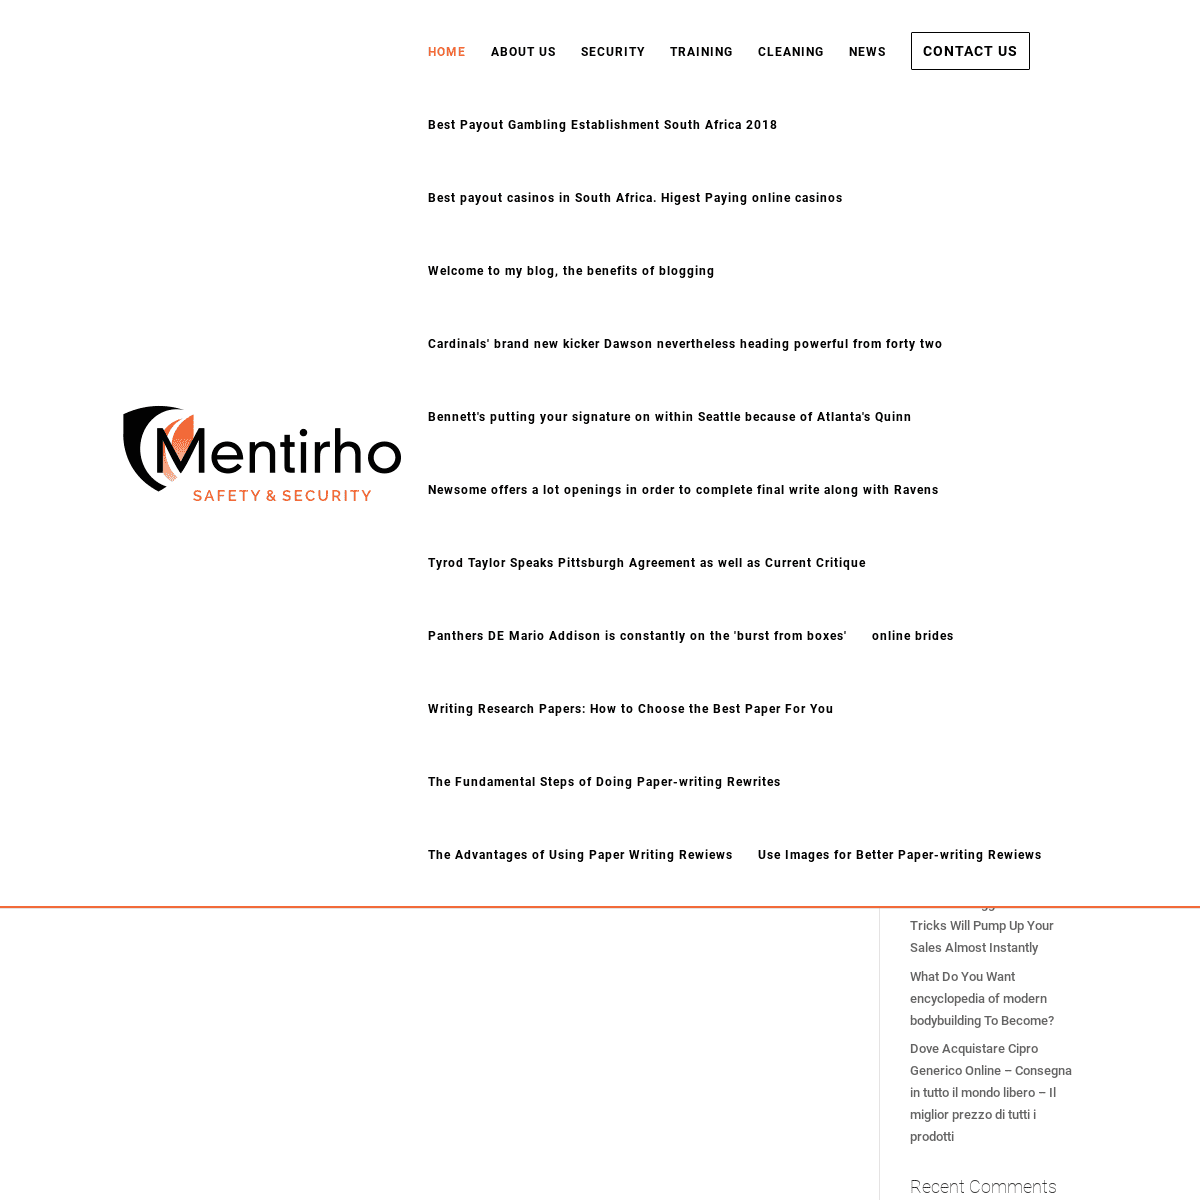 A complete backup of https://mentirho.co.za